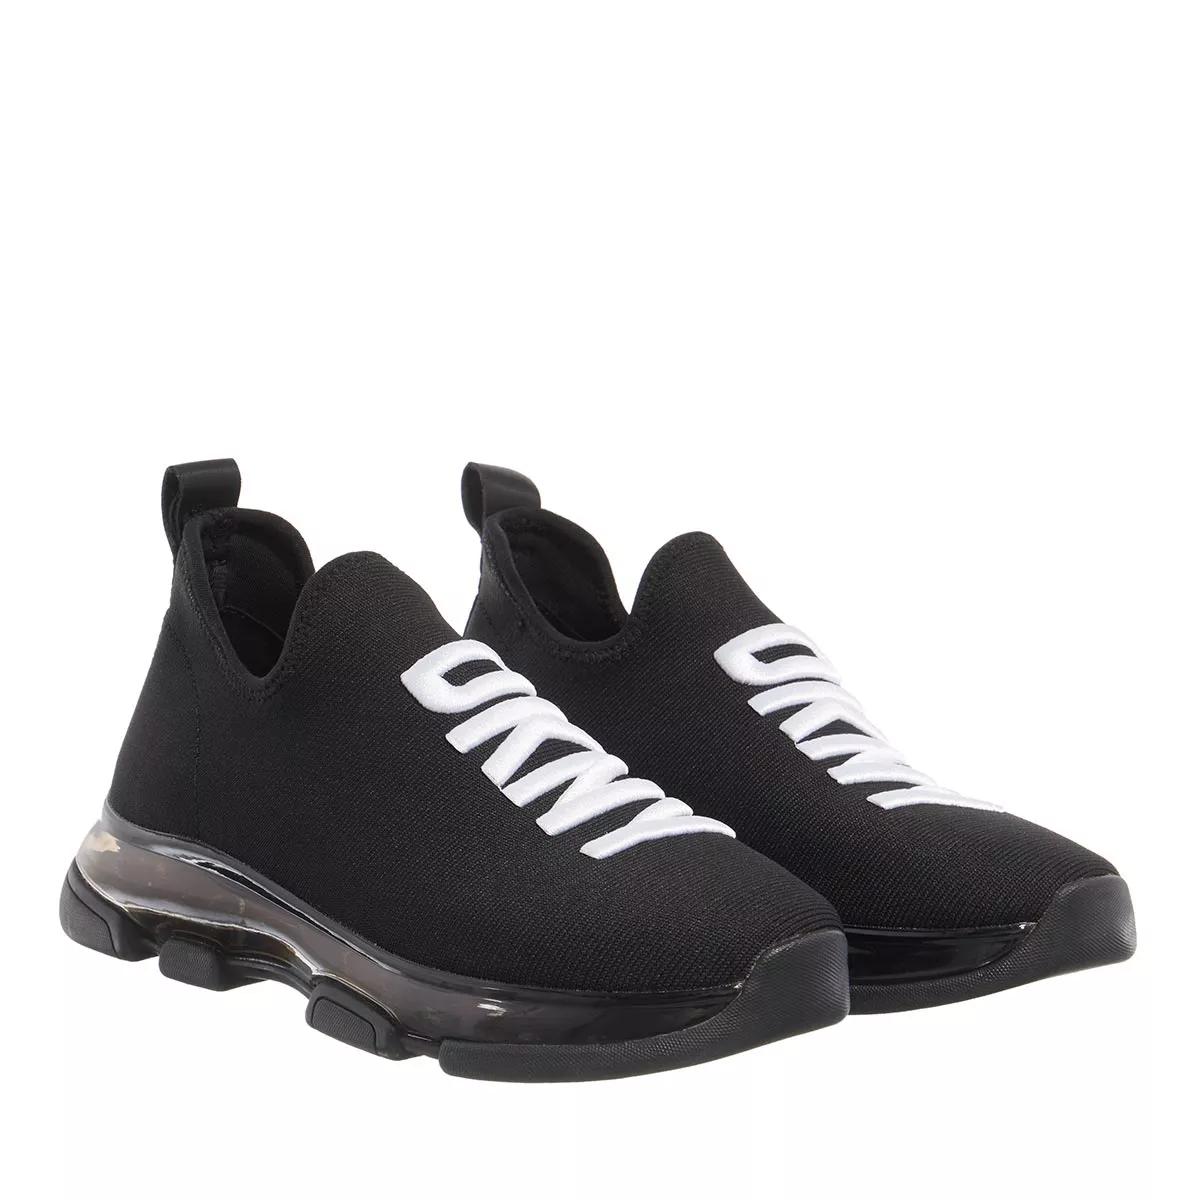 DKNY Sneakers - Tambre Slip On Sneaker - Gr. 38 (EU) - in Schwarz - für Damen von DKNY